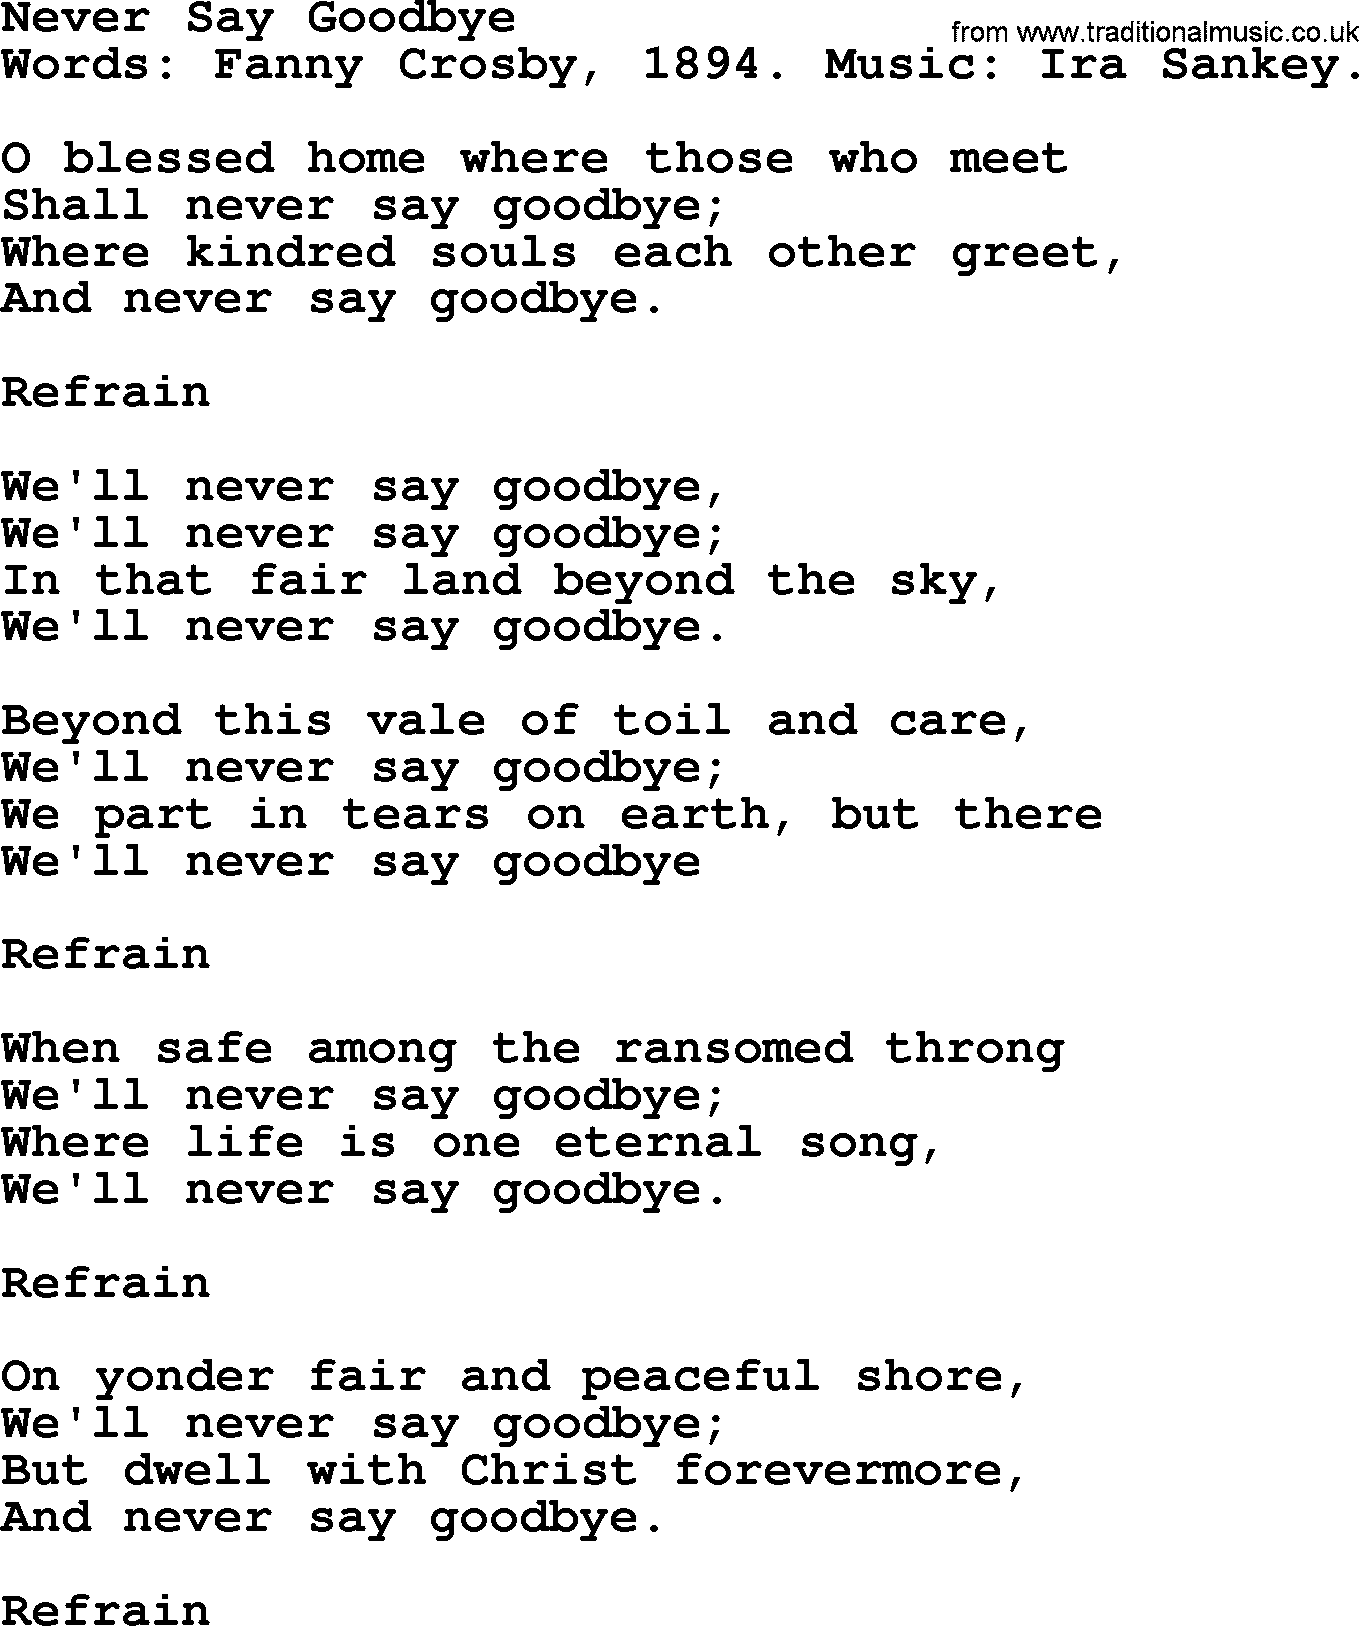 Fanny Crosby song: Never Say Goodbye, lyrics